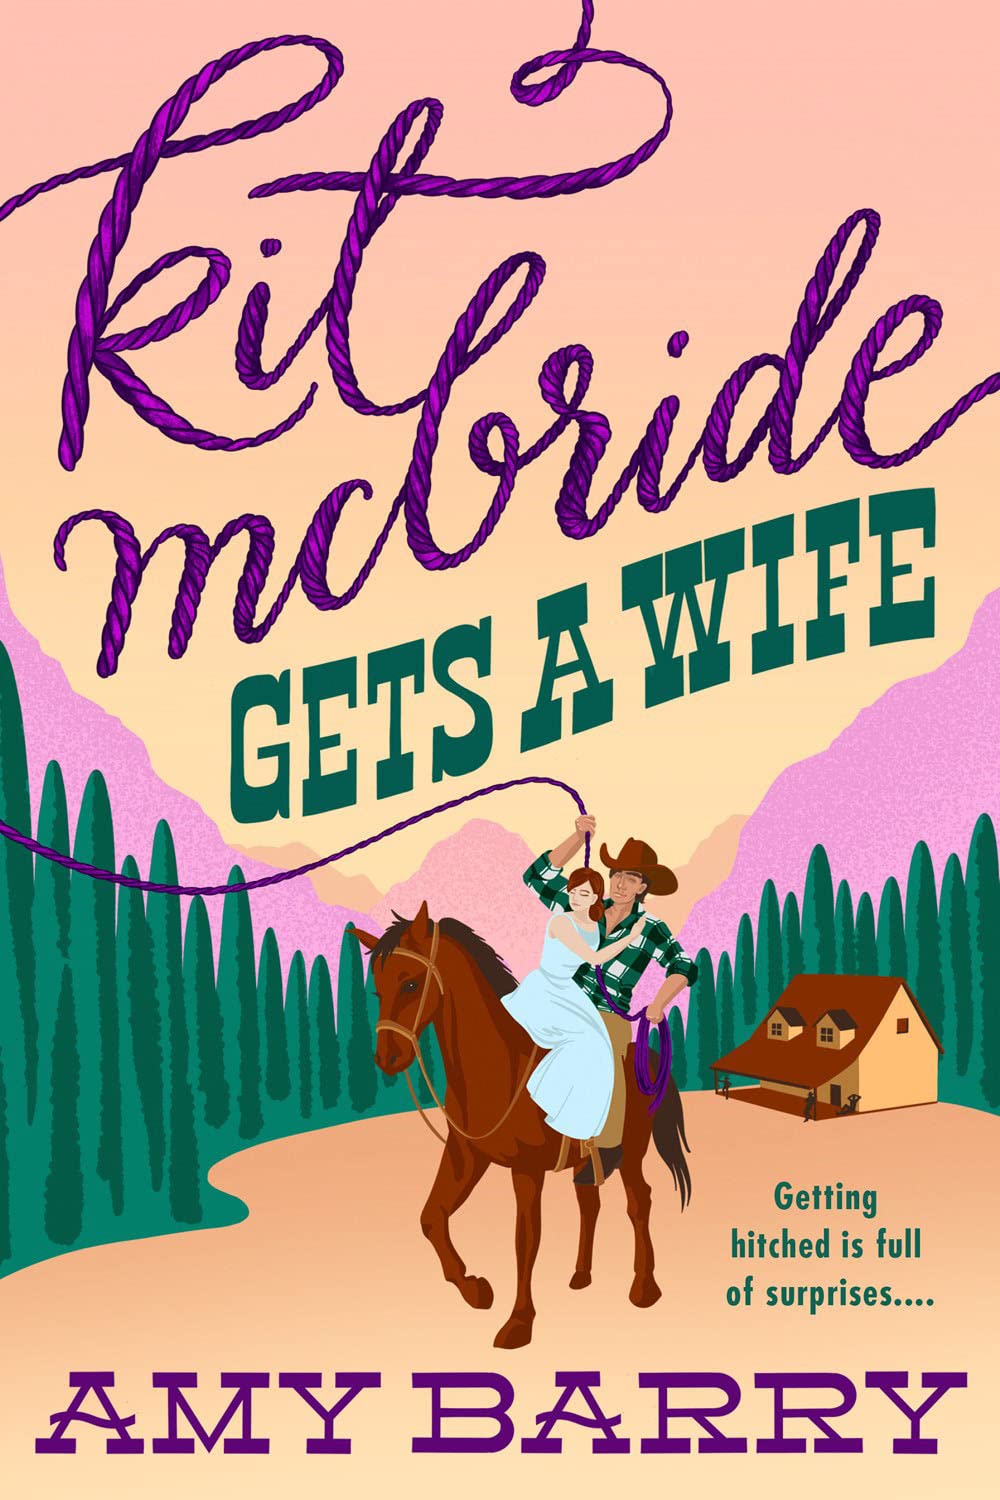 Image for "Kit McBride Gets a Wife"